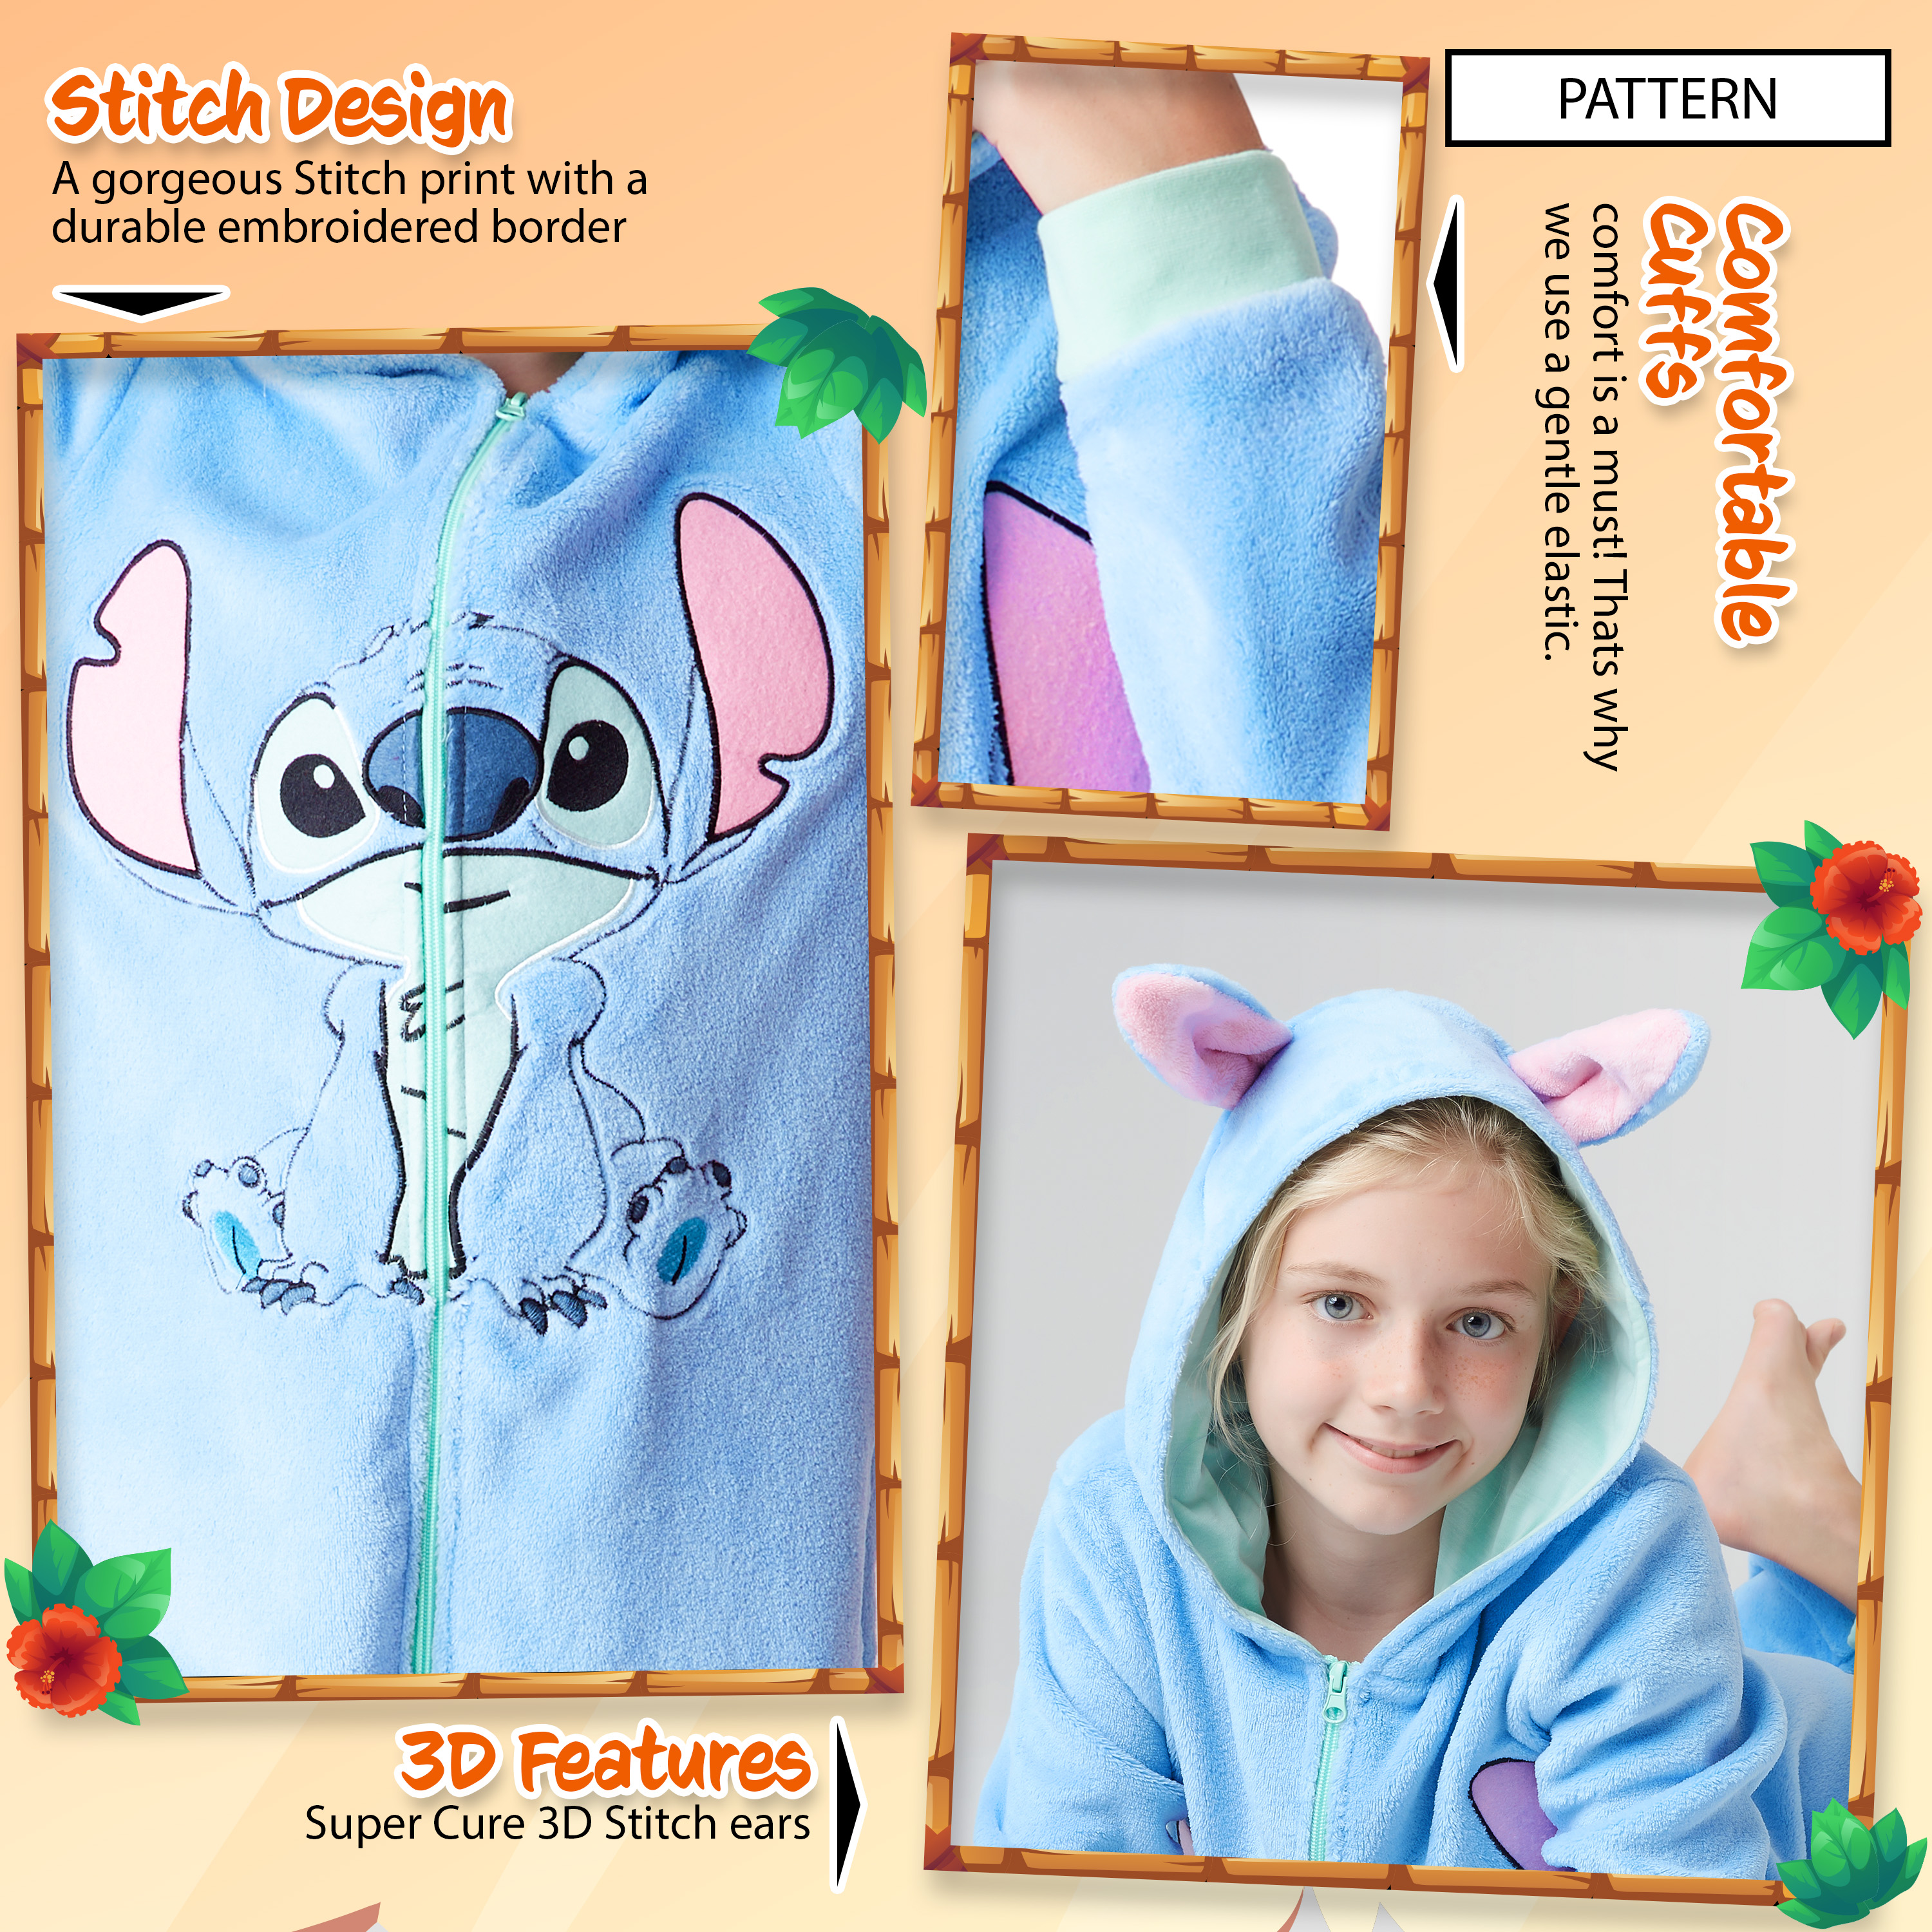 Costume Kigurumi - Disney - Stitch Enfant - DISNEY